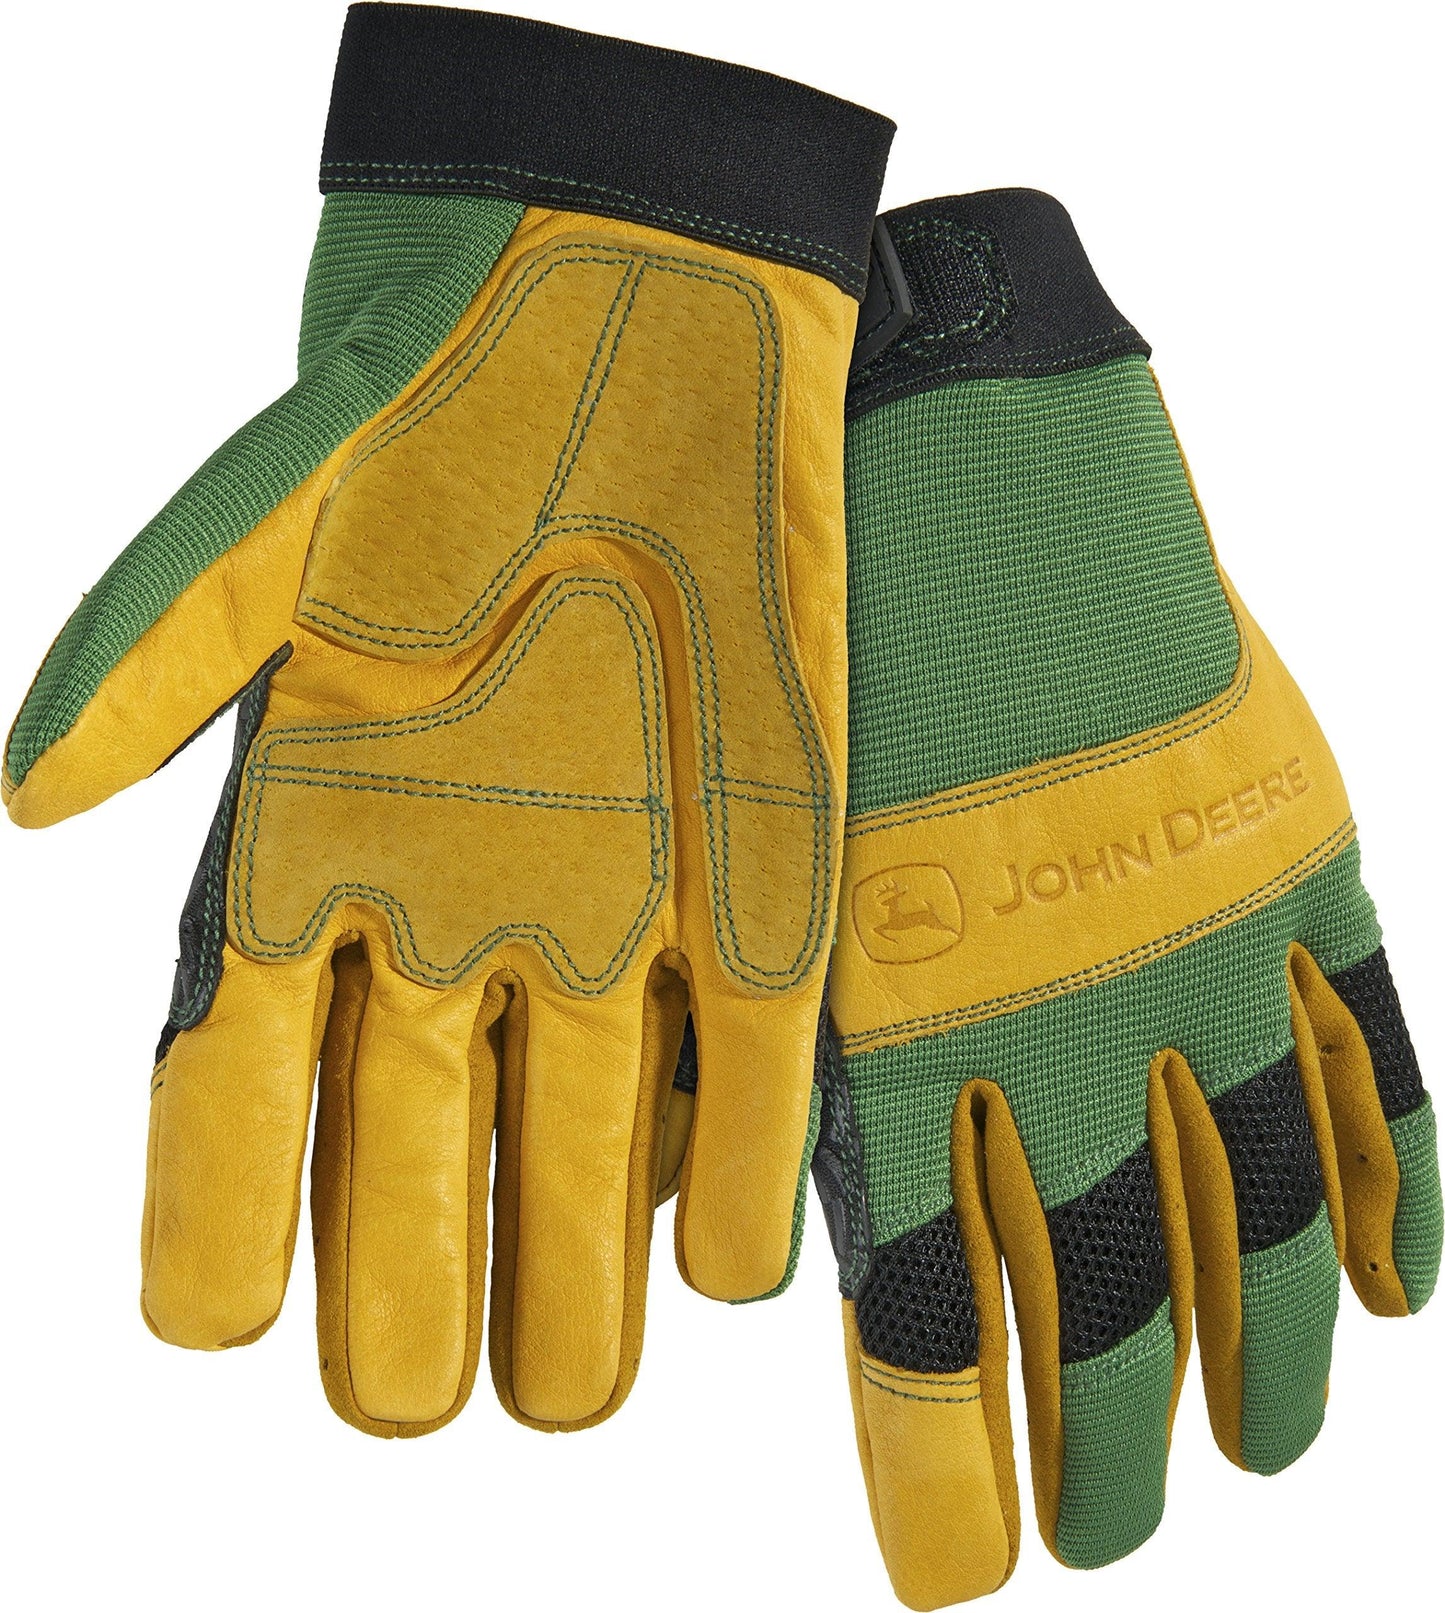 Men's John Deere Cowhide Work Gloves with Spandex Back (Green/Tan)(Large)